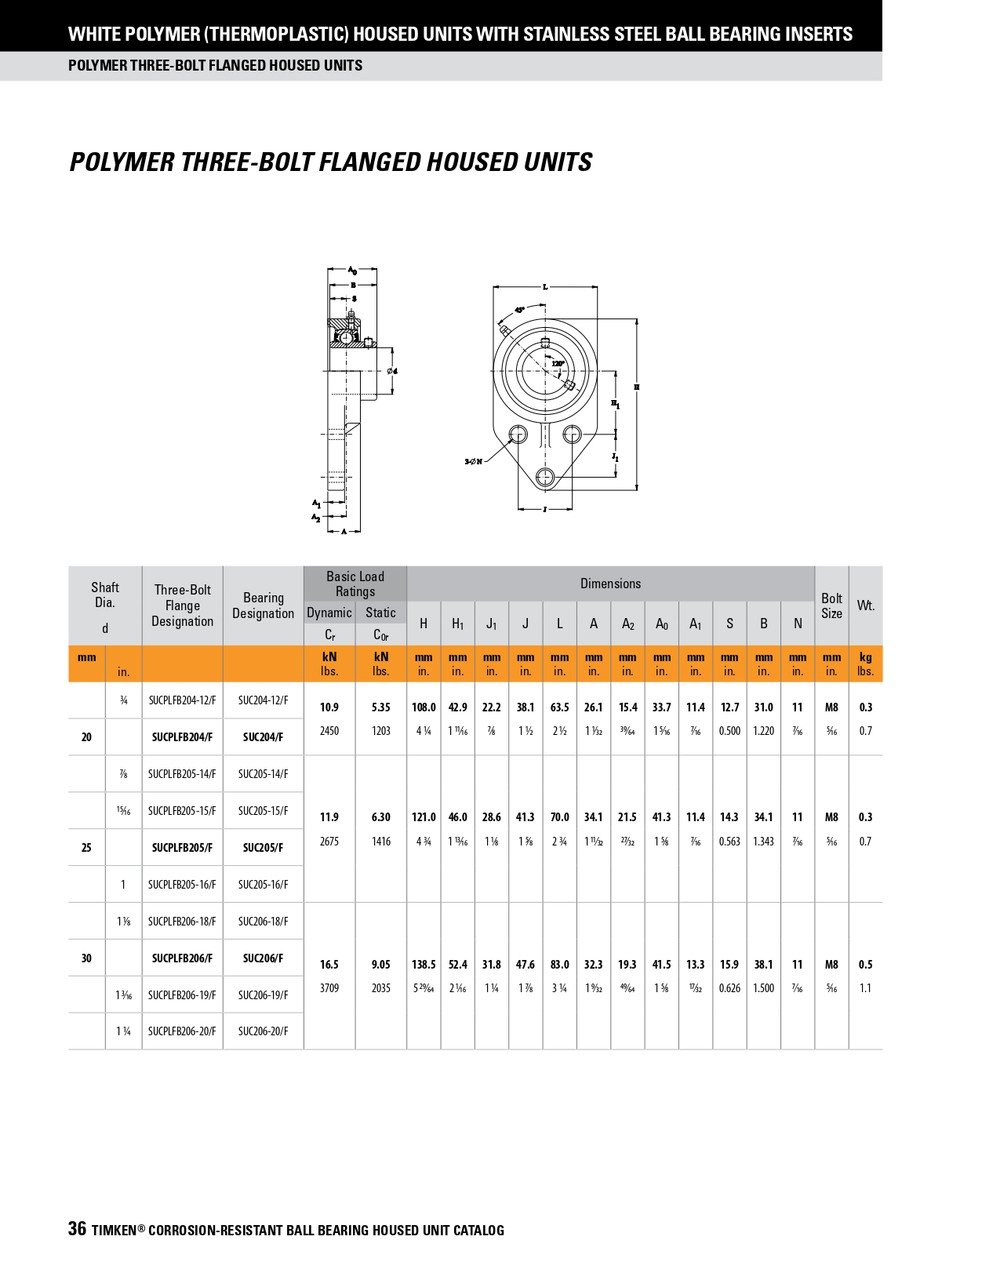 25mm Polymer Set Screw Three-Bolt Flange Block Assembly   SUCPLFB205/FVSL613